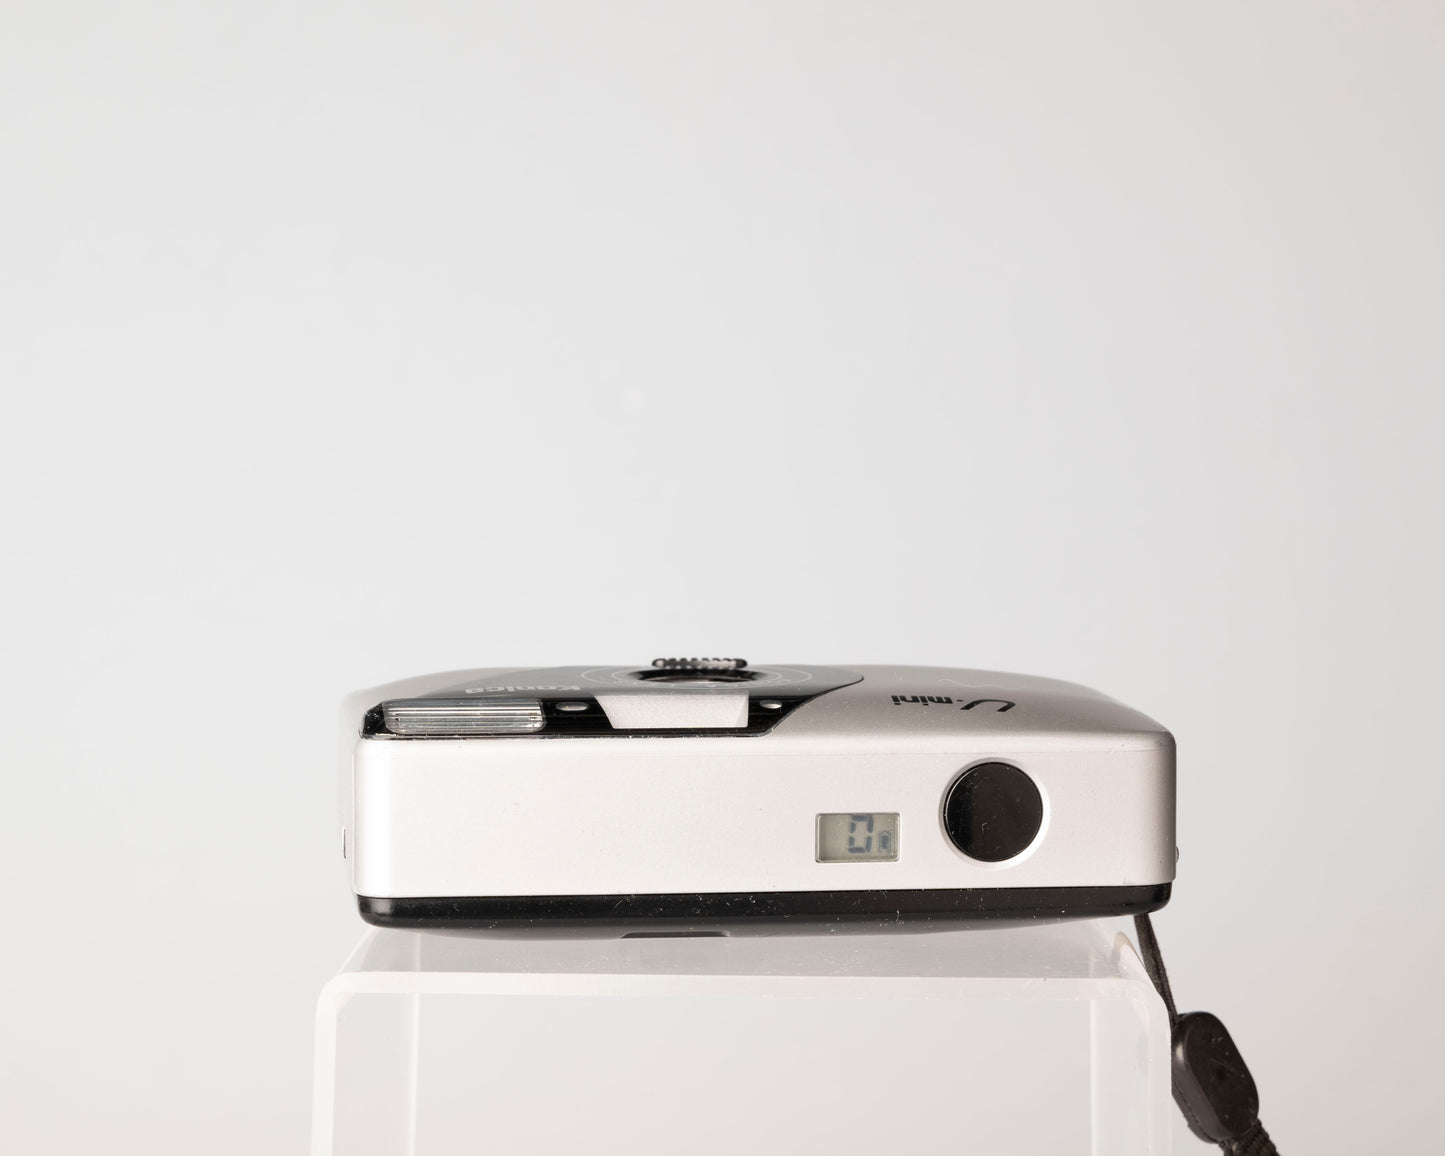 Appareil photo Konica U-mini ultra compact 35 mm avec boîte et manuel (série 3314218)